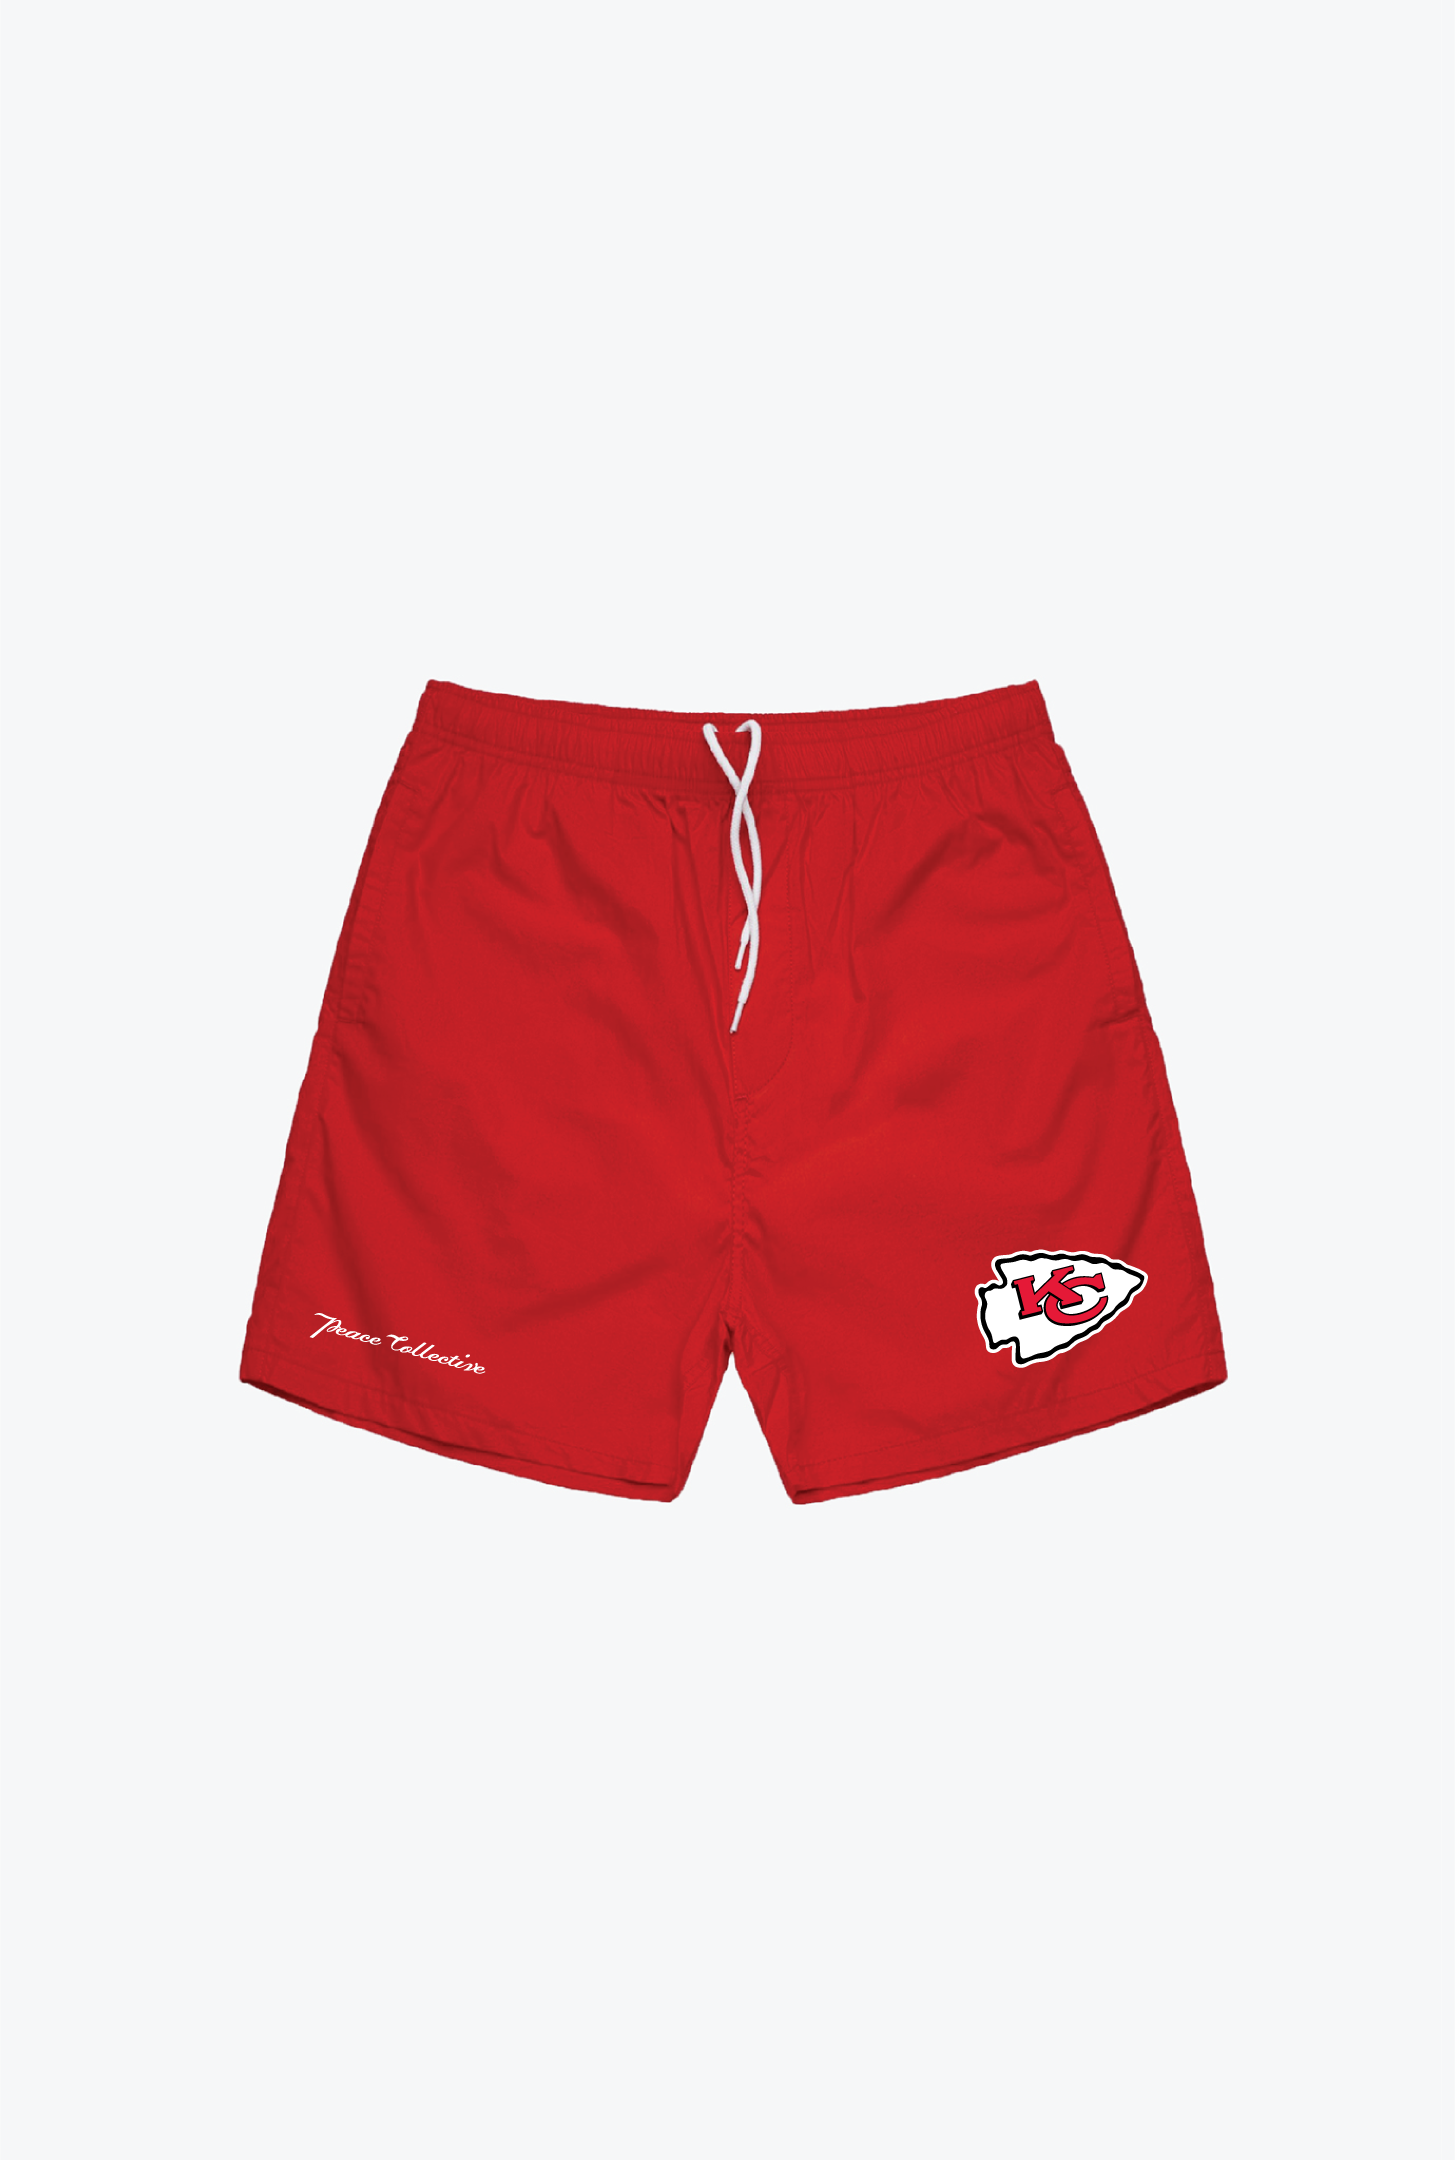 Kansas City Chiefs Board Shorts - Red